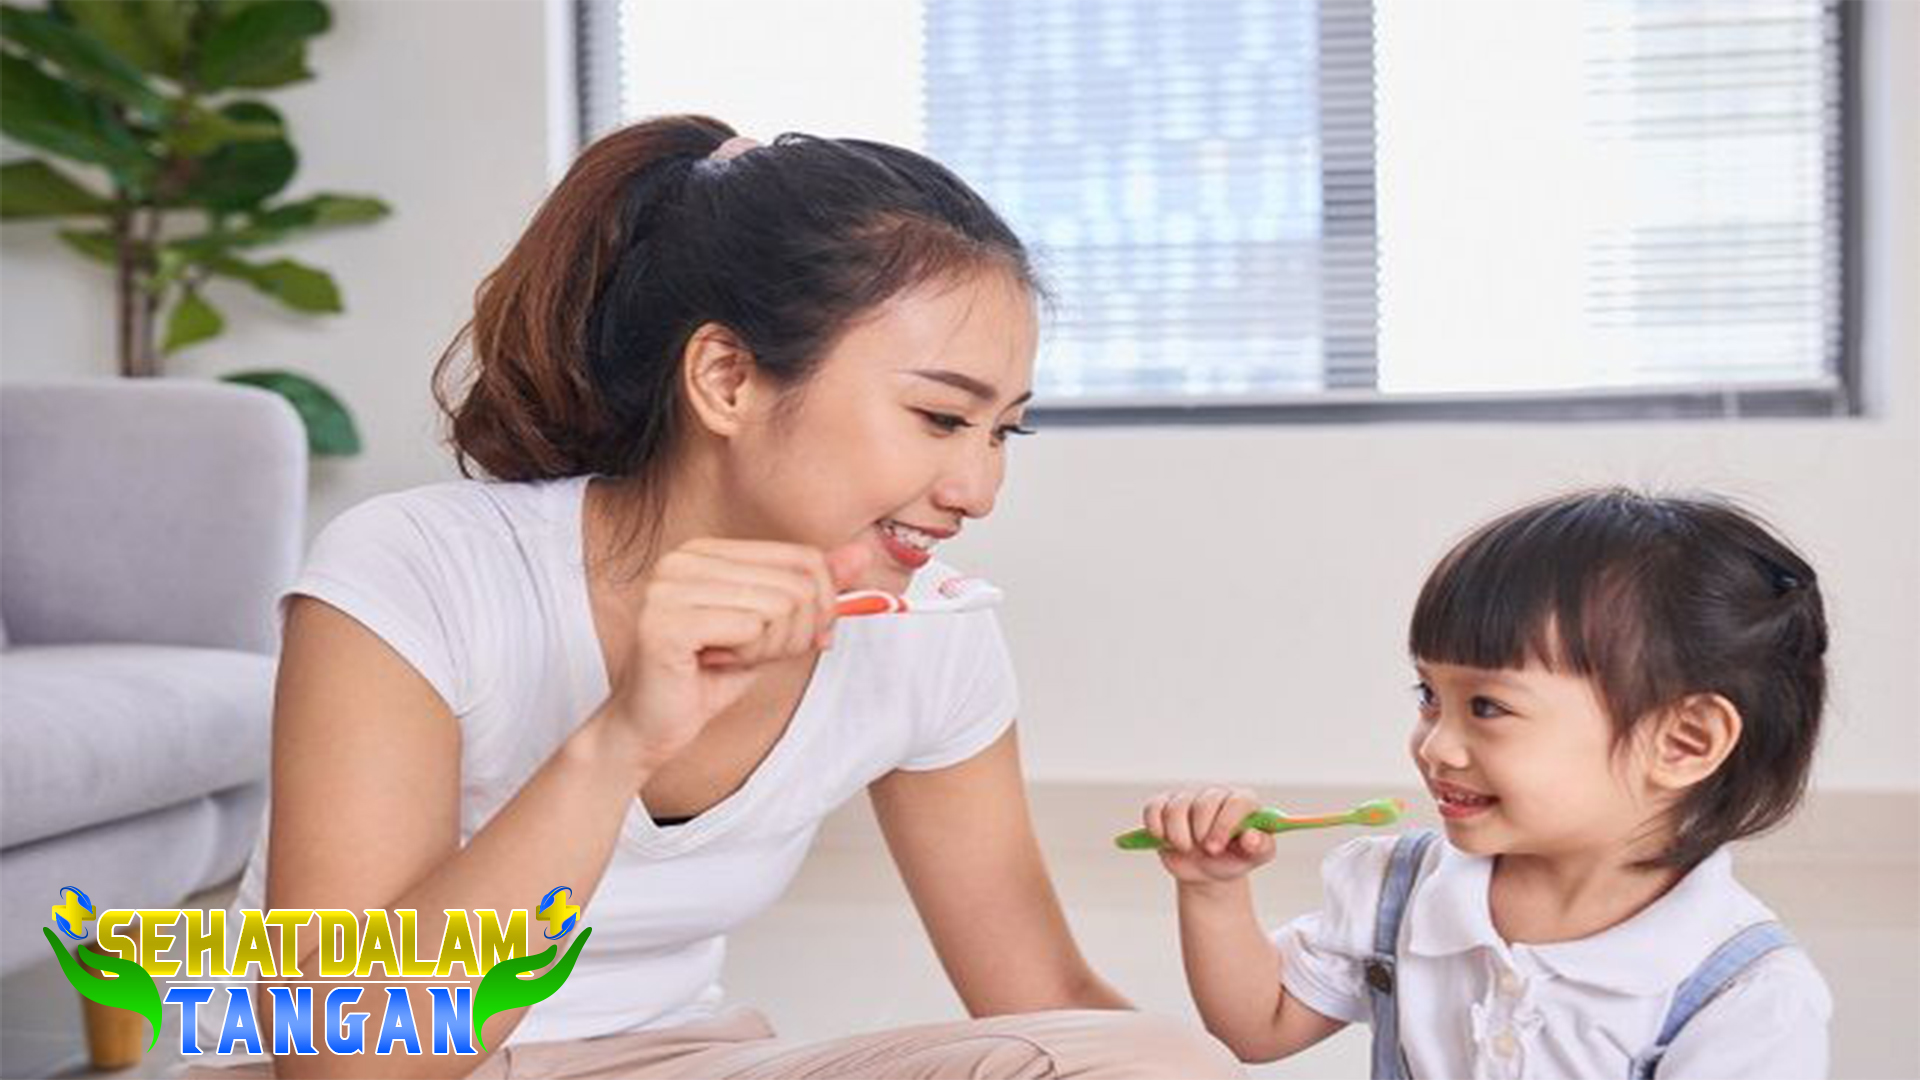 Cara untuk Mencegah Gigi Berlubang pada Anak dengan Tepat